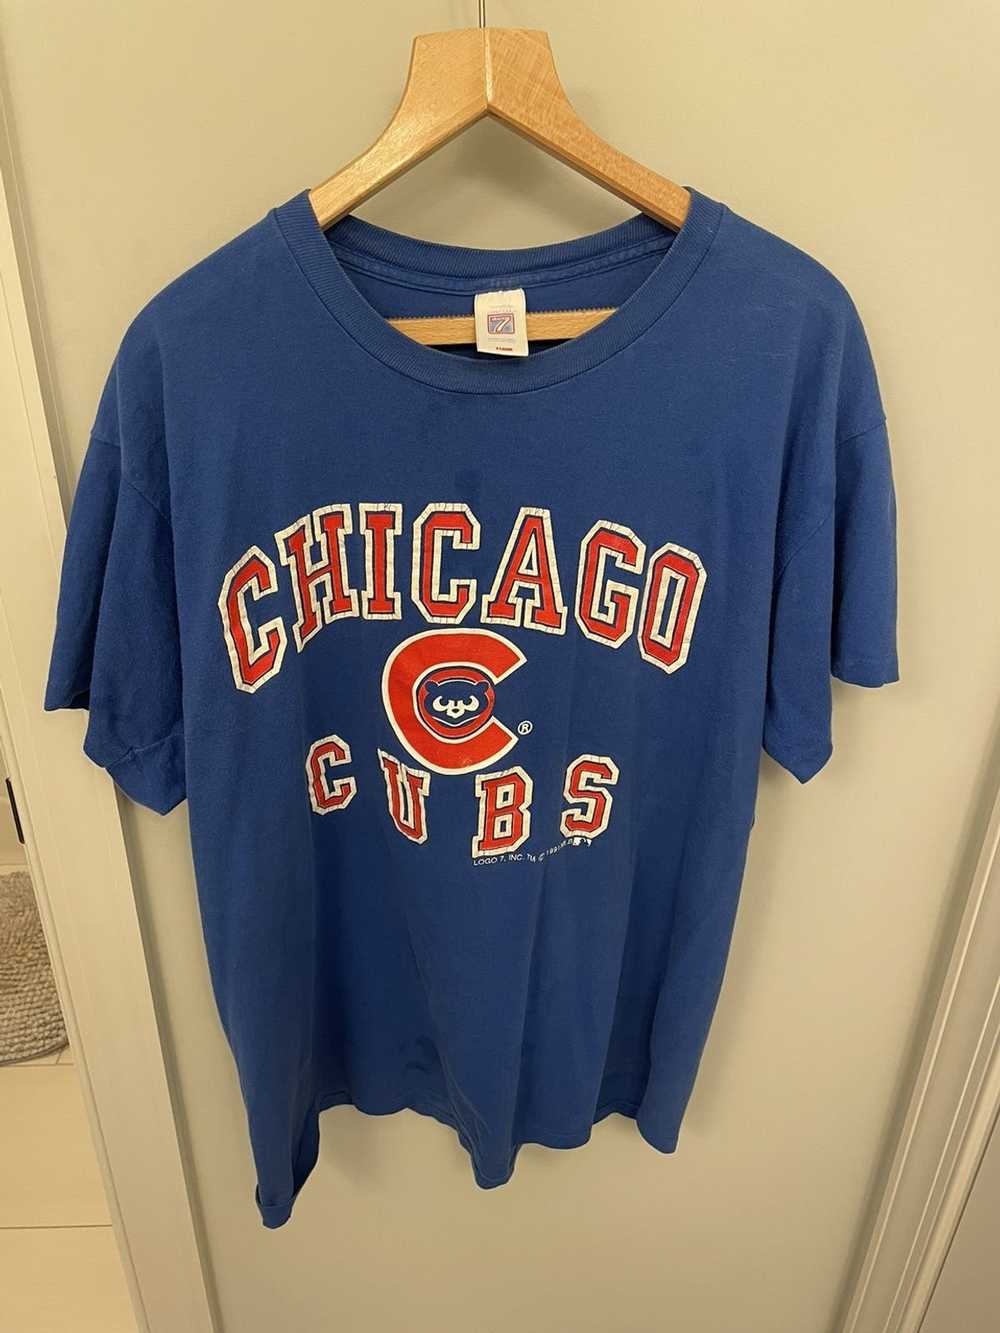 Vintage Vintage Chicago Cubs tee - image 1